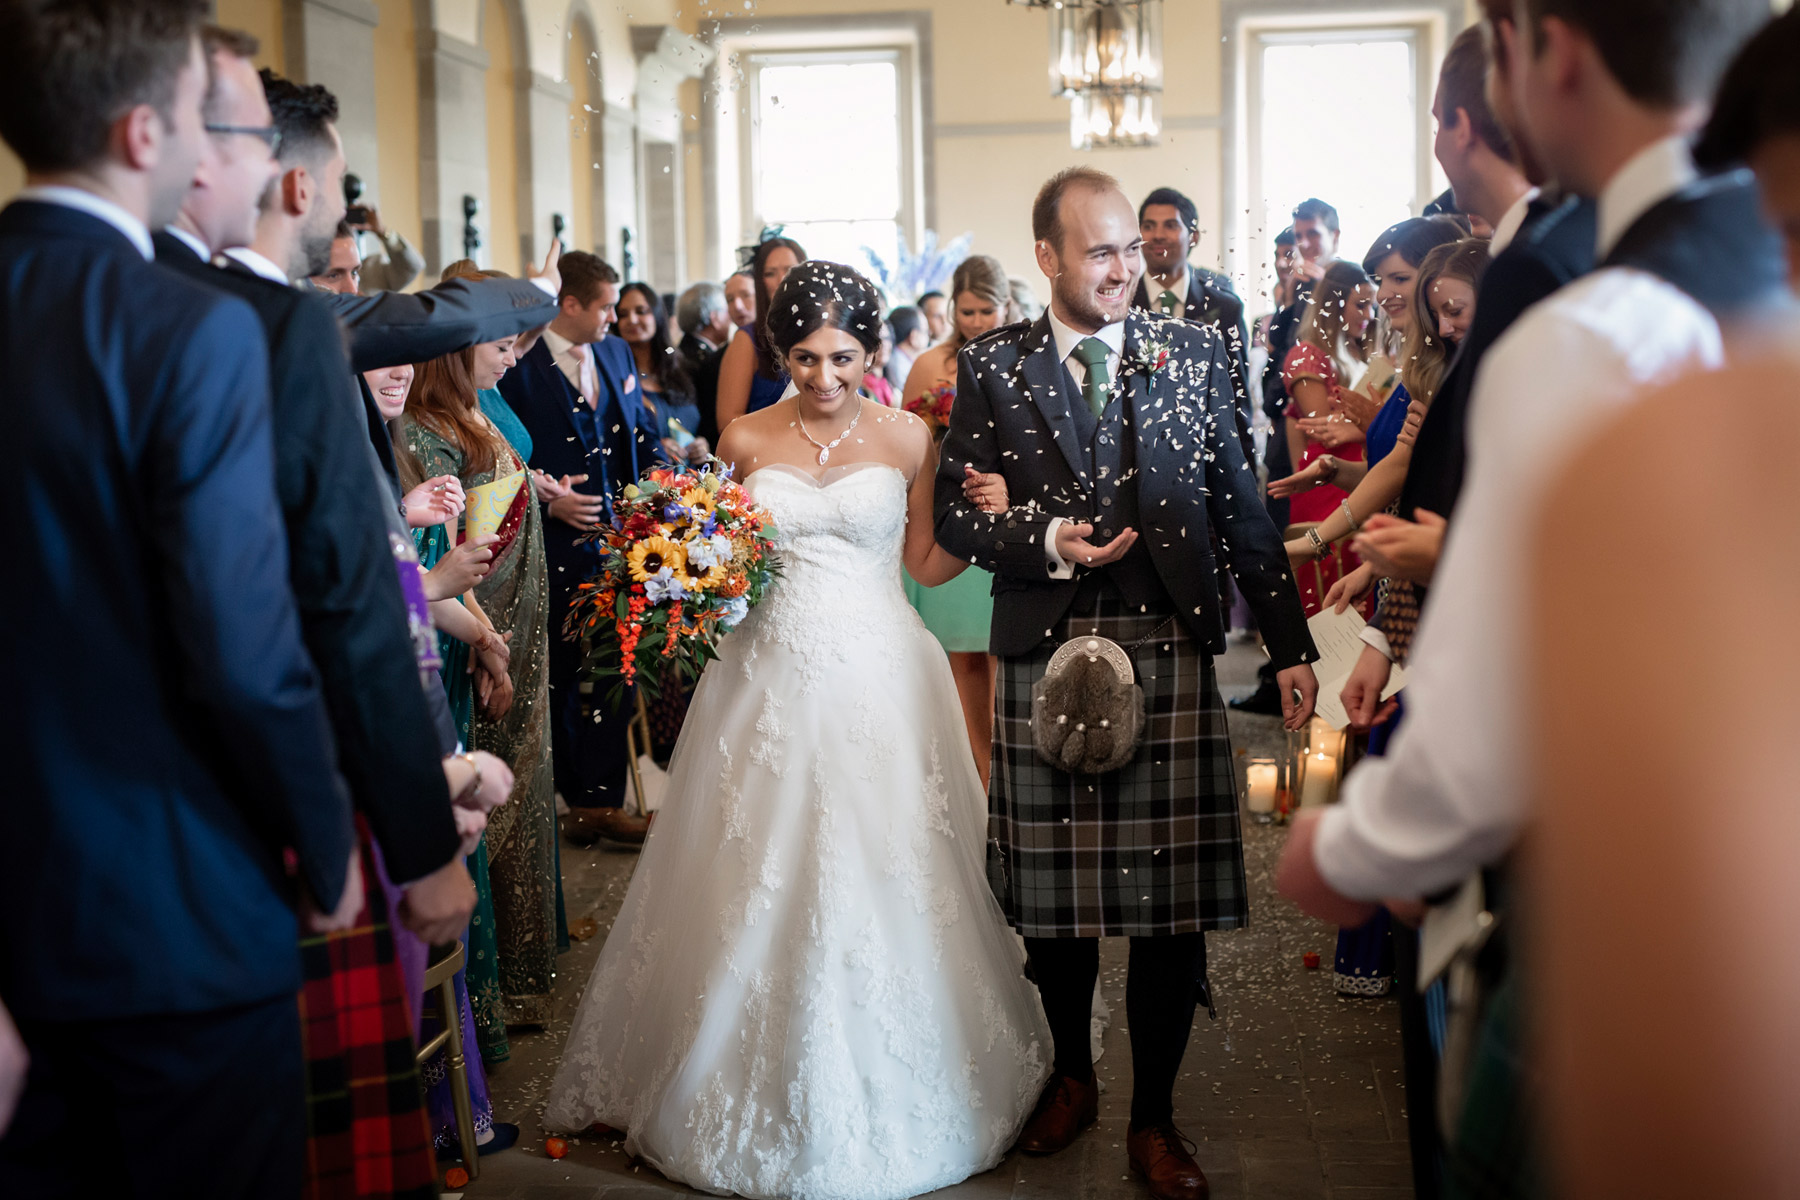 Just married at hopetoun house Scotland